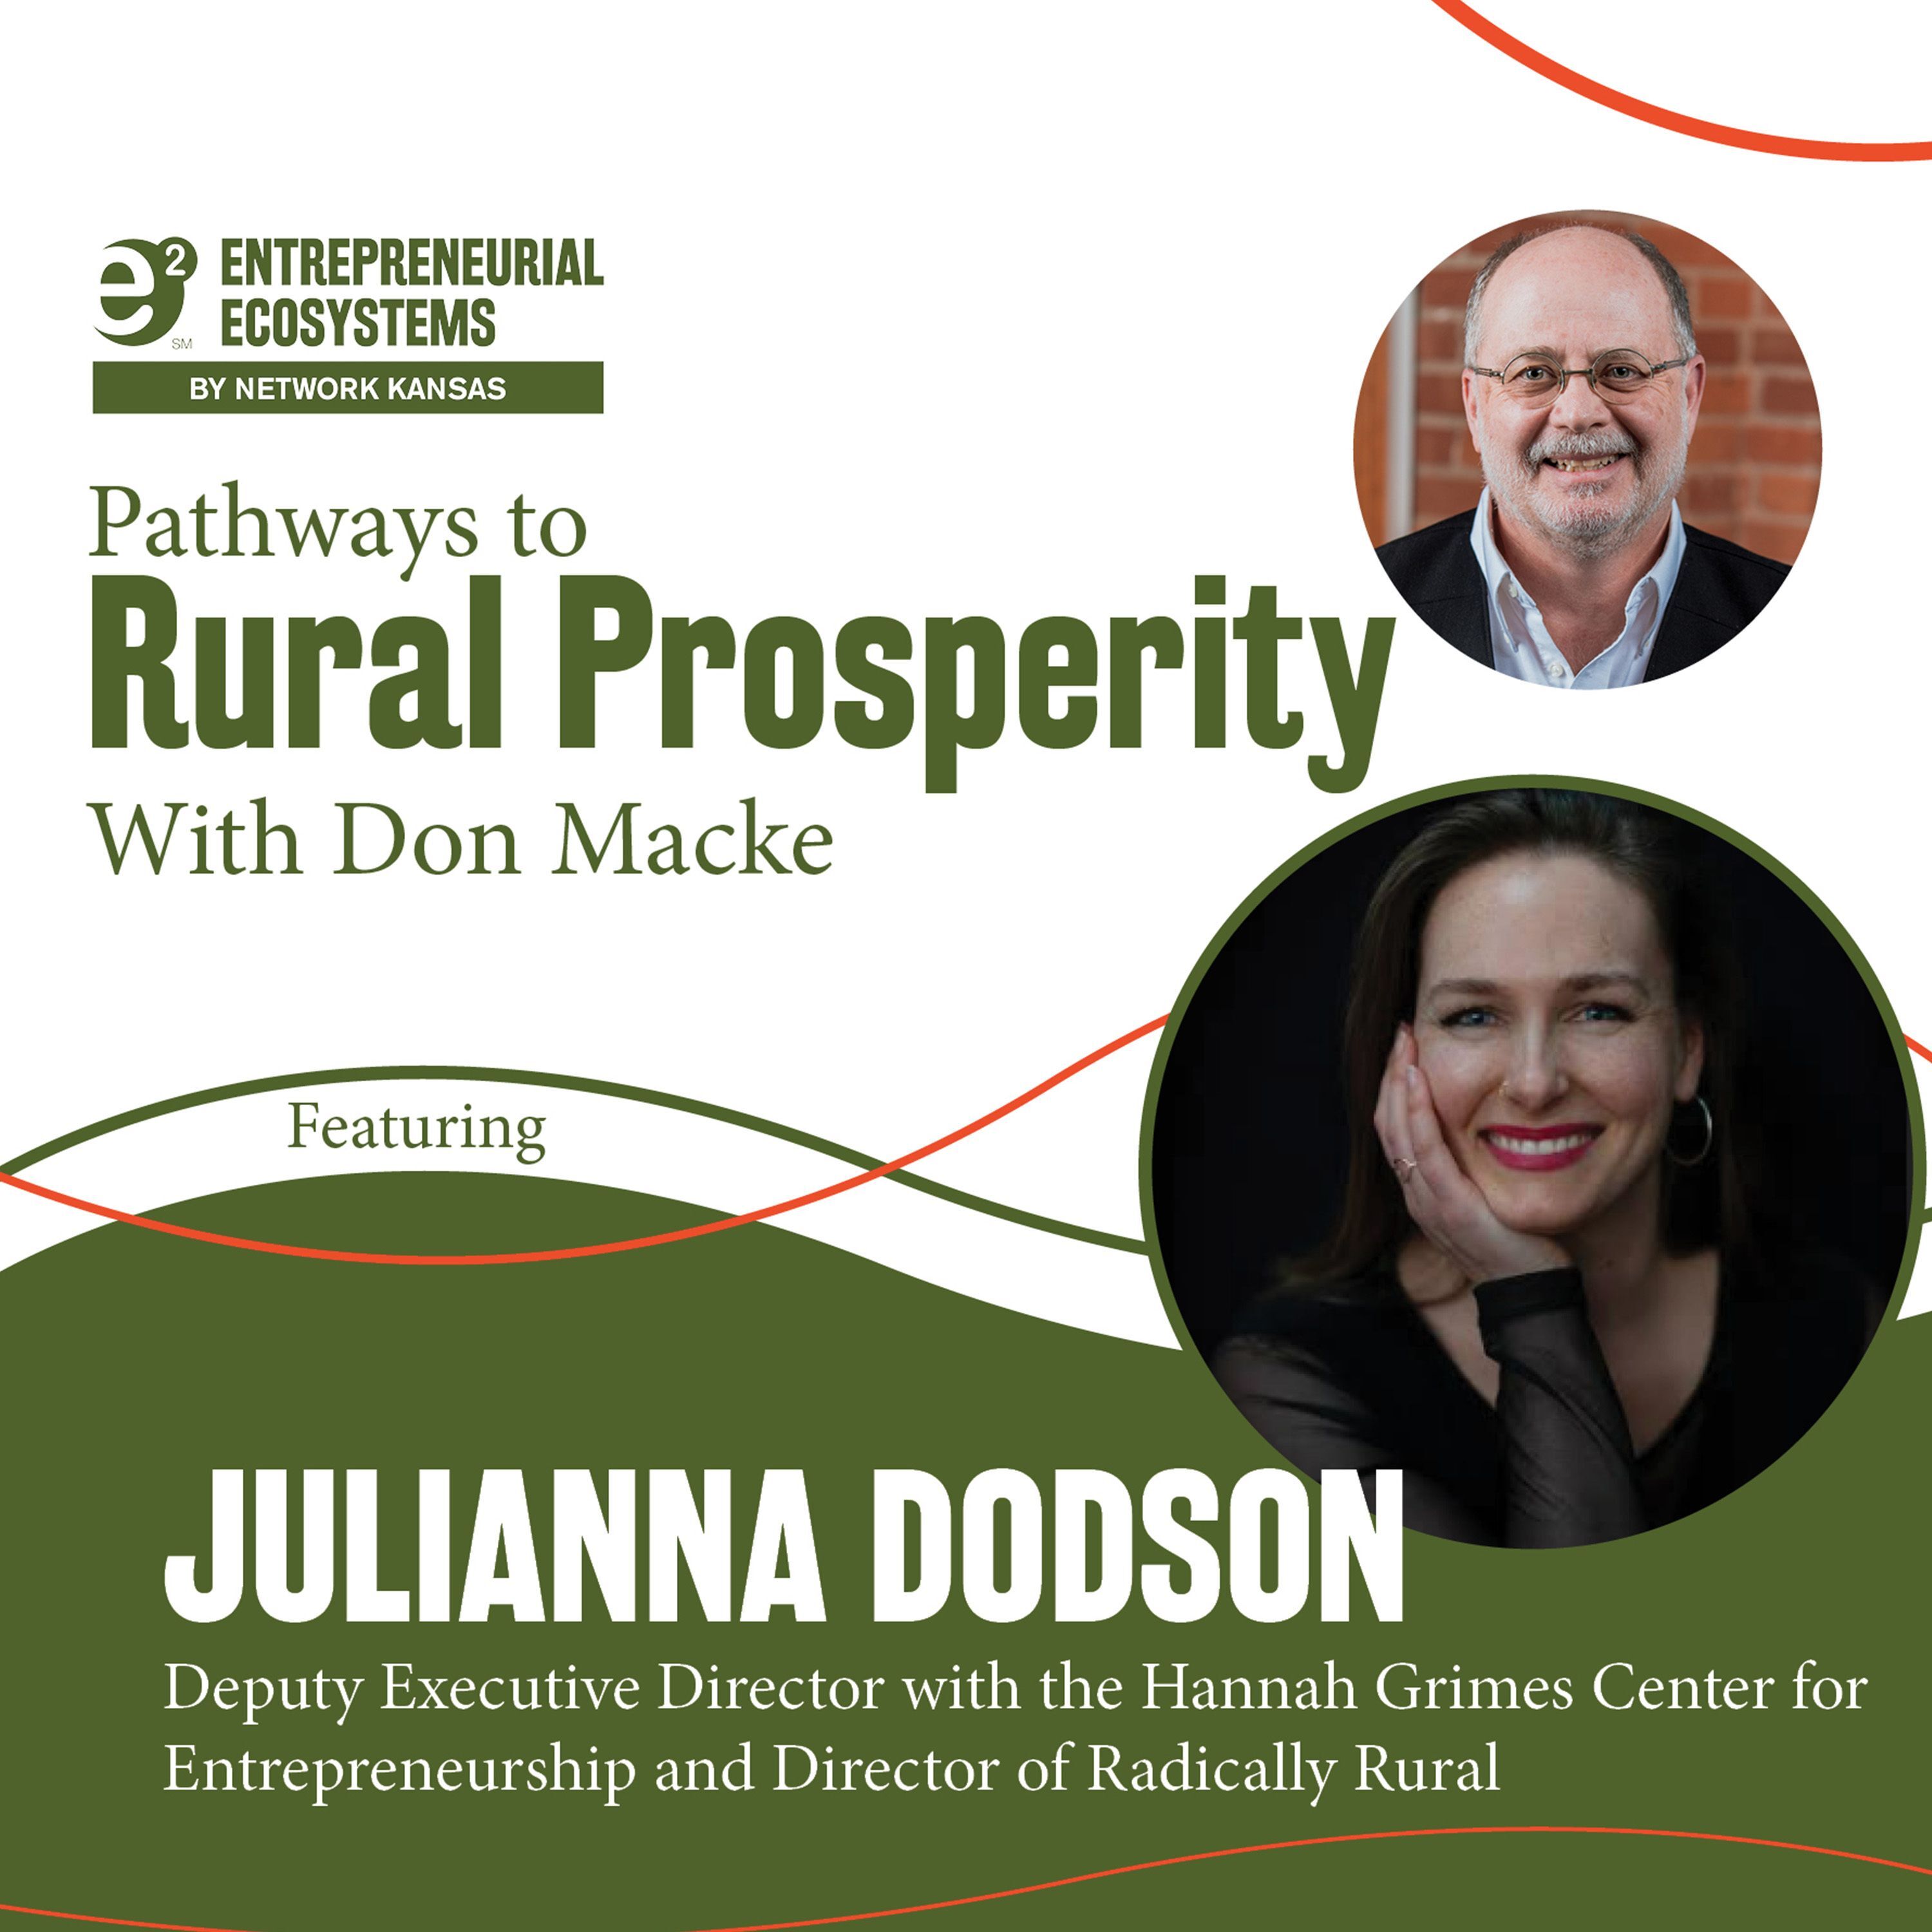 Julianna Dodson – Hannah Grimes and Radically Rural